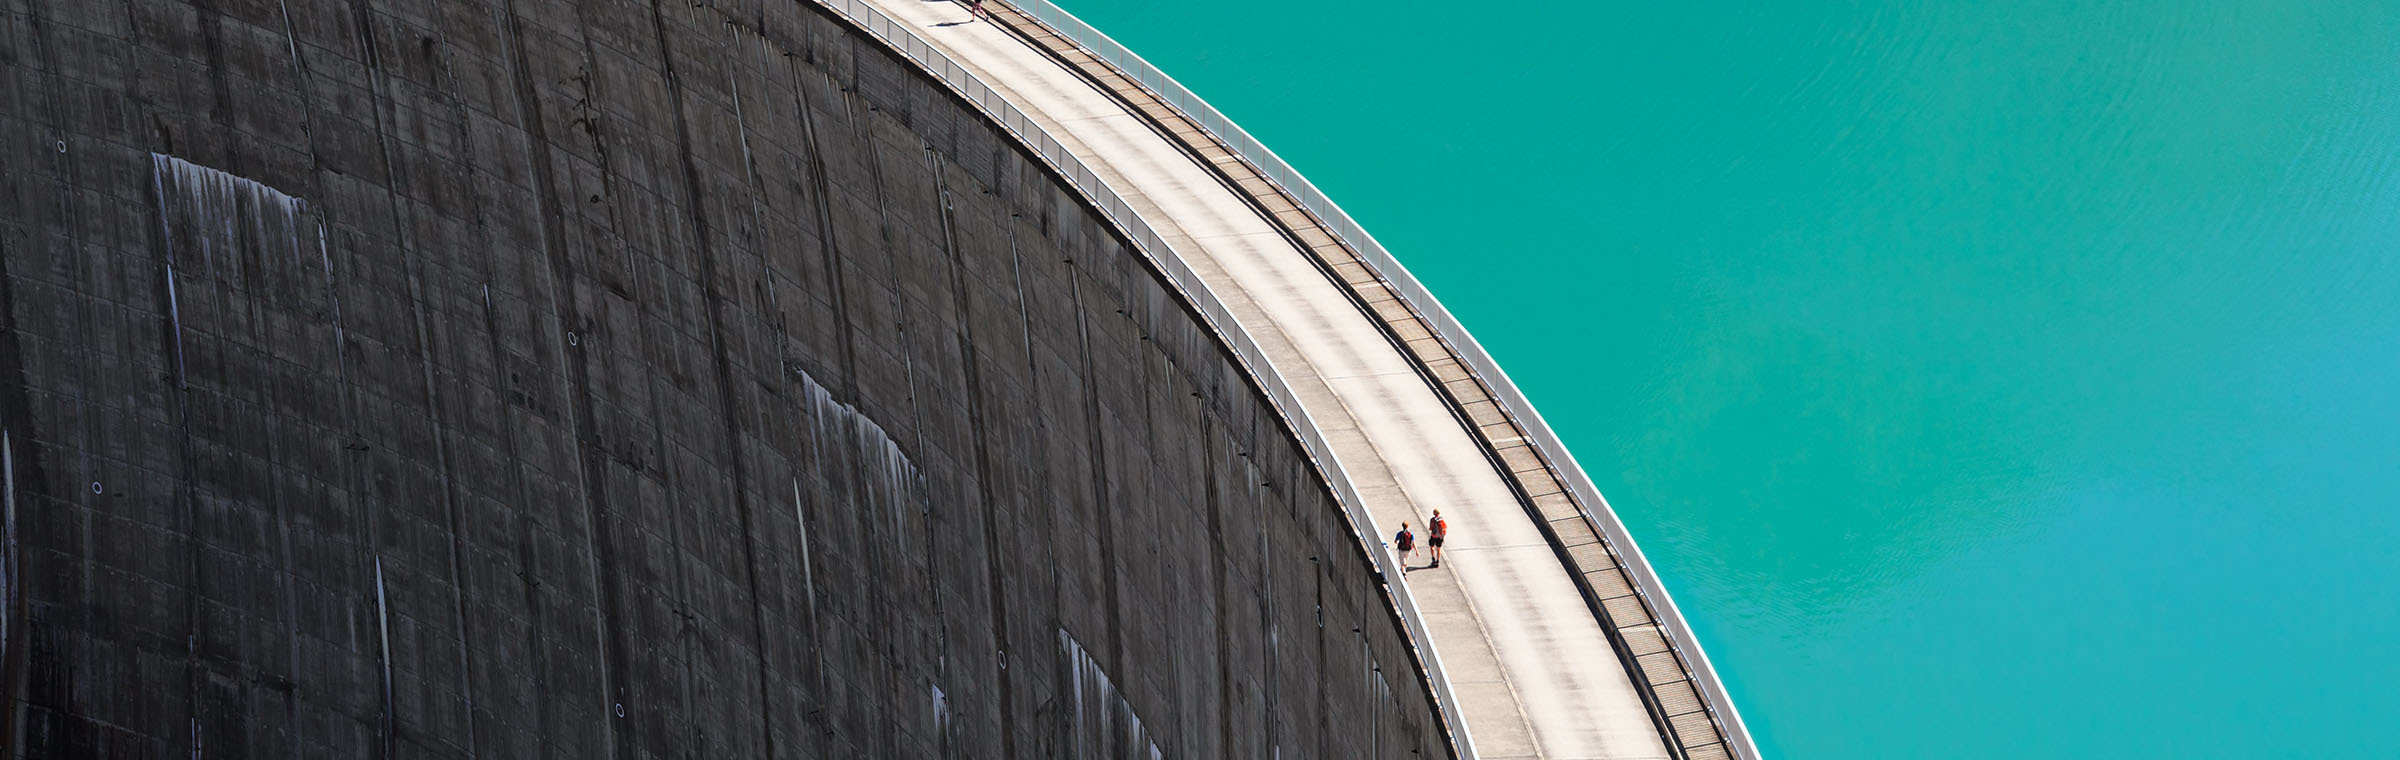 aerial shot of people walking on a reservoir dam